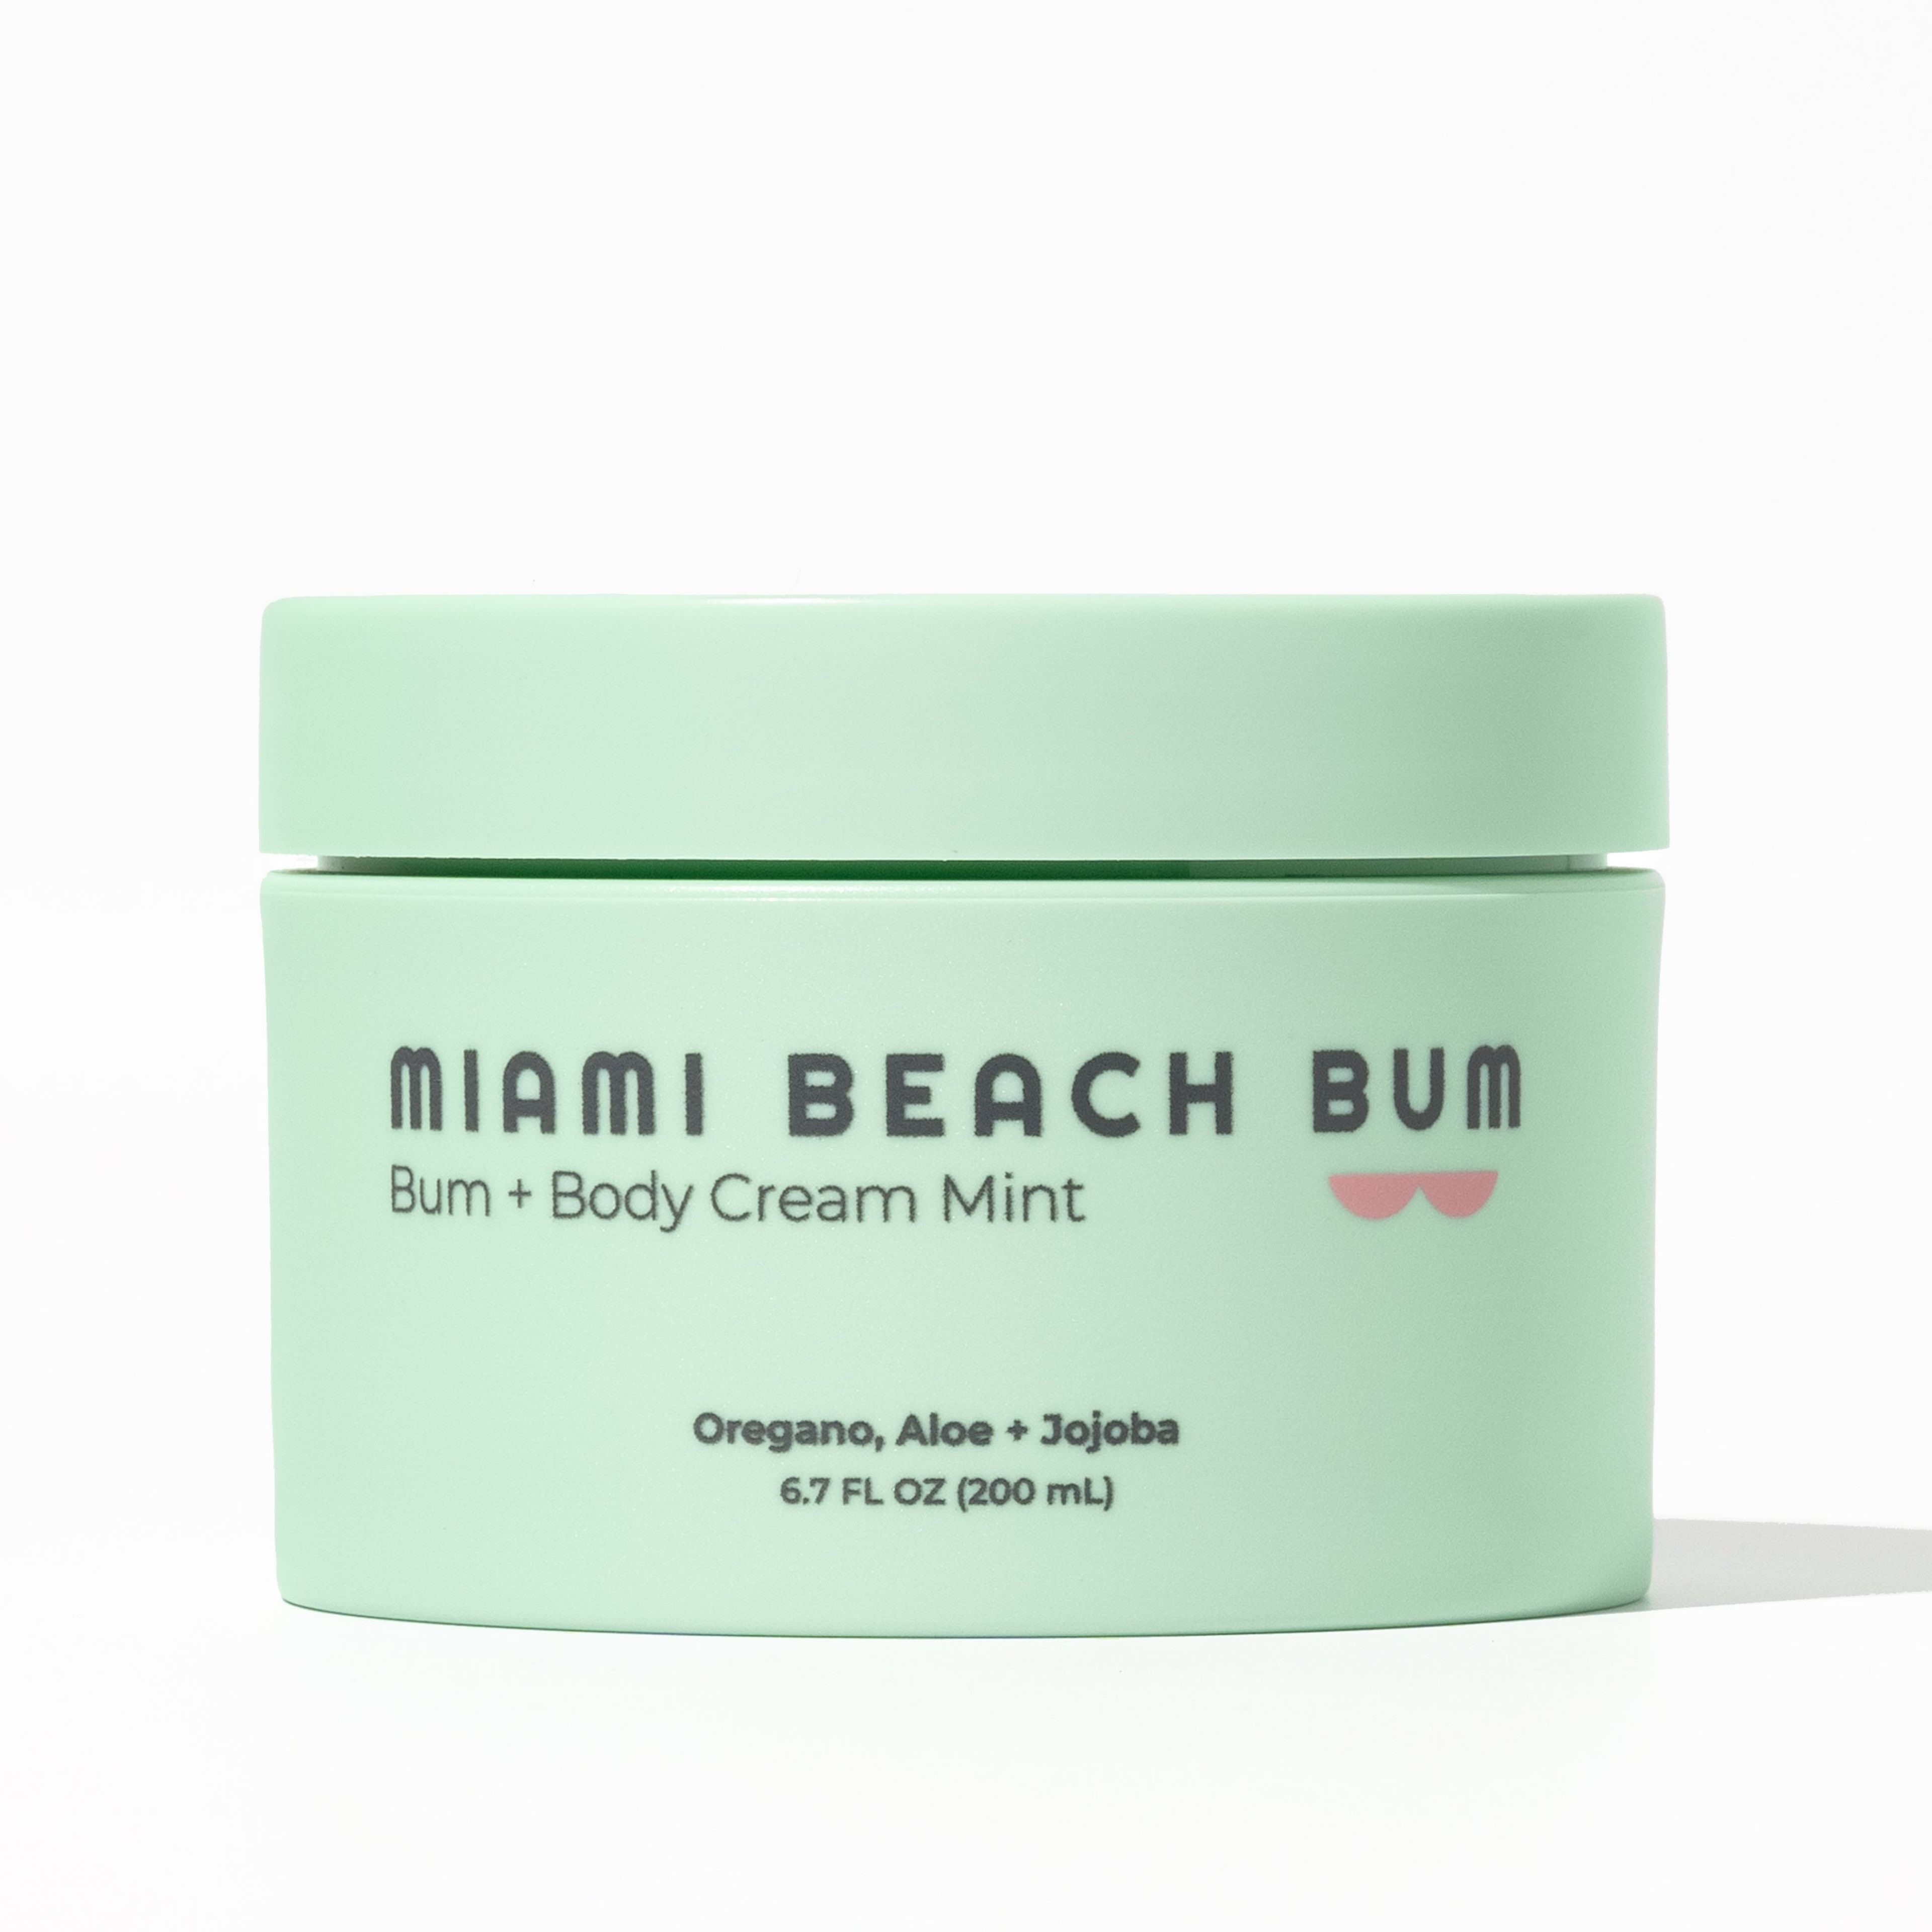 www.miamibeachbum.com/products/bum-and-body-cream-mint